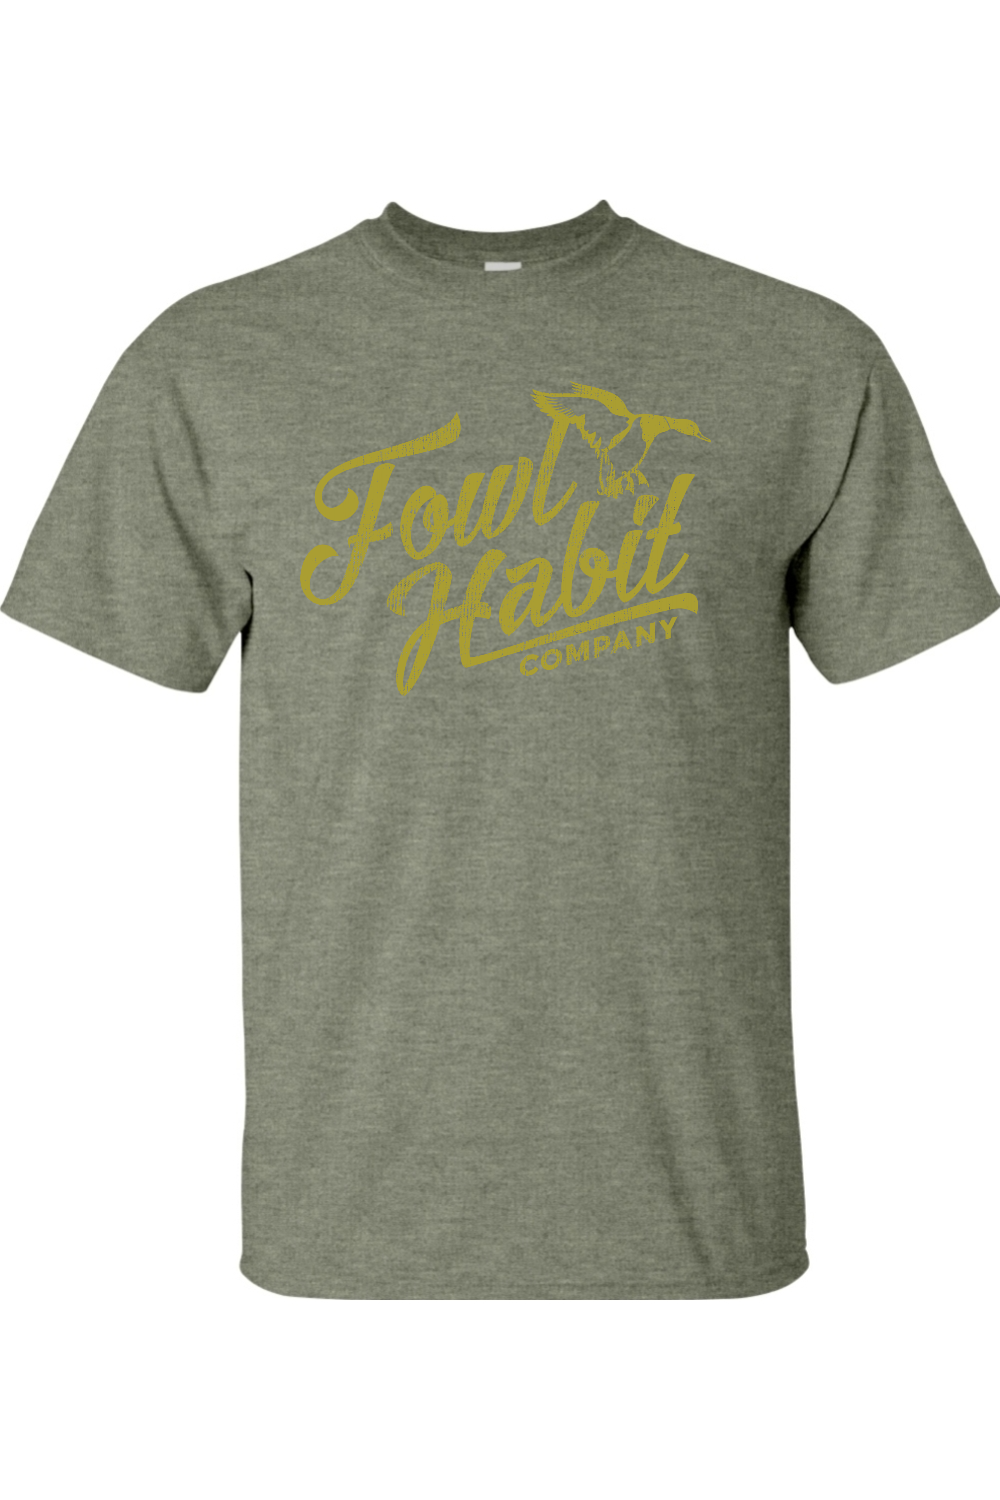 The Logo T-Shirt - Fowl Habit Co.